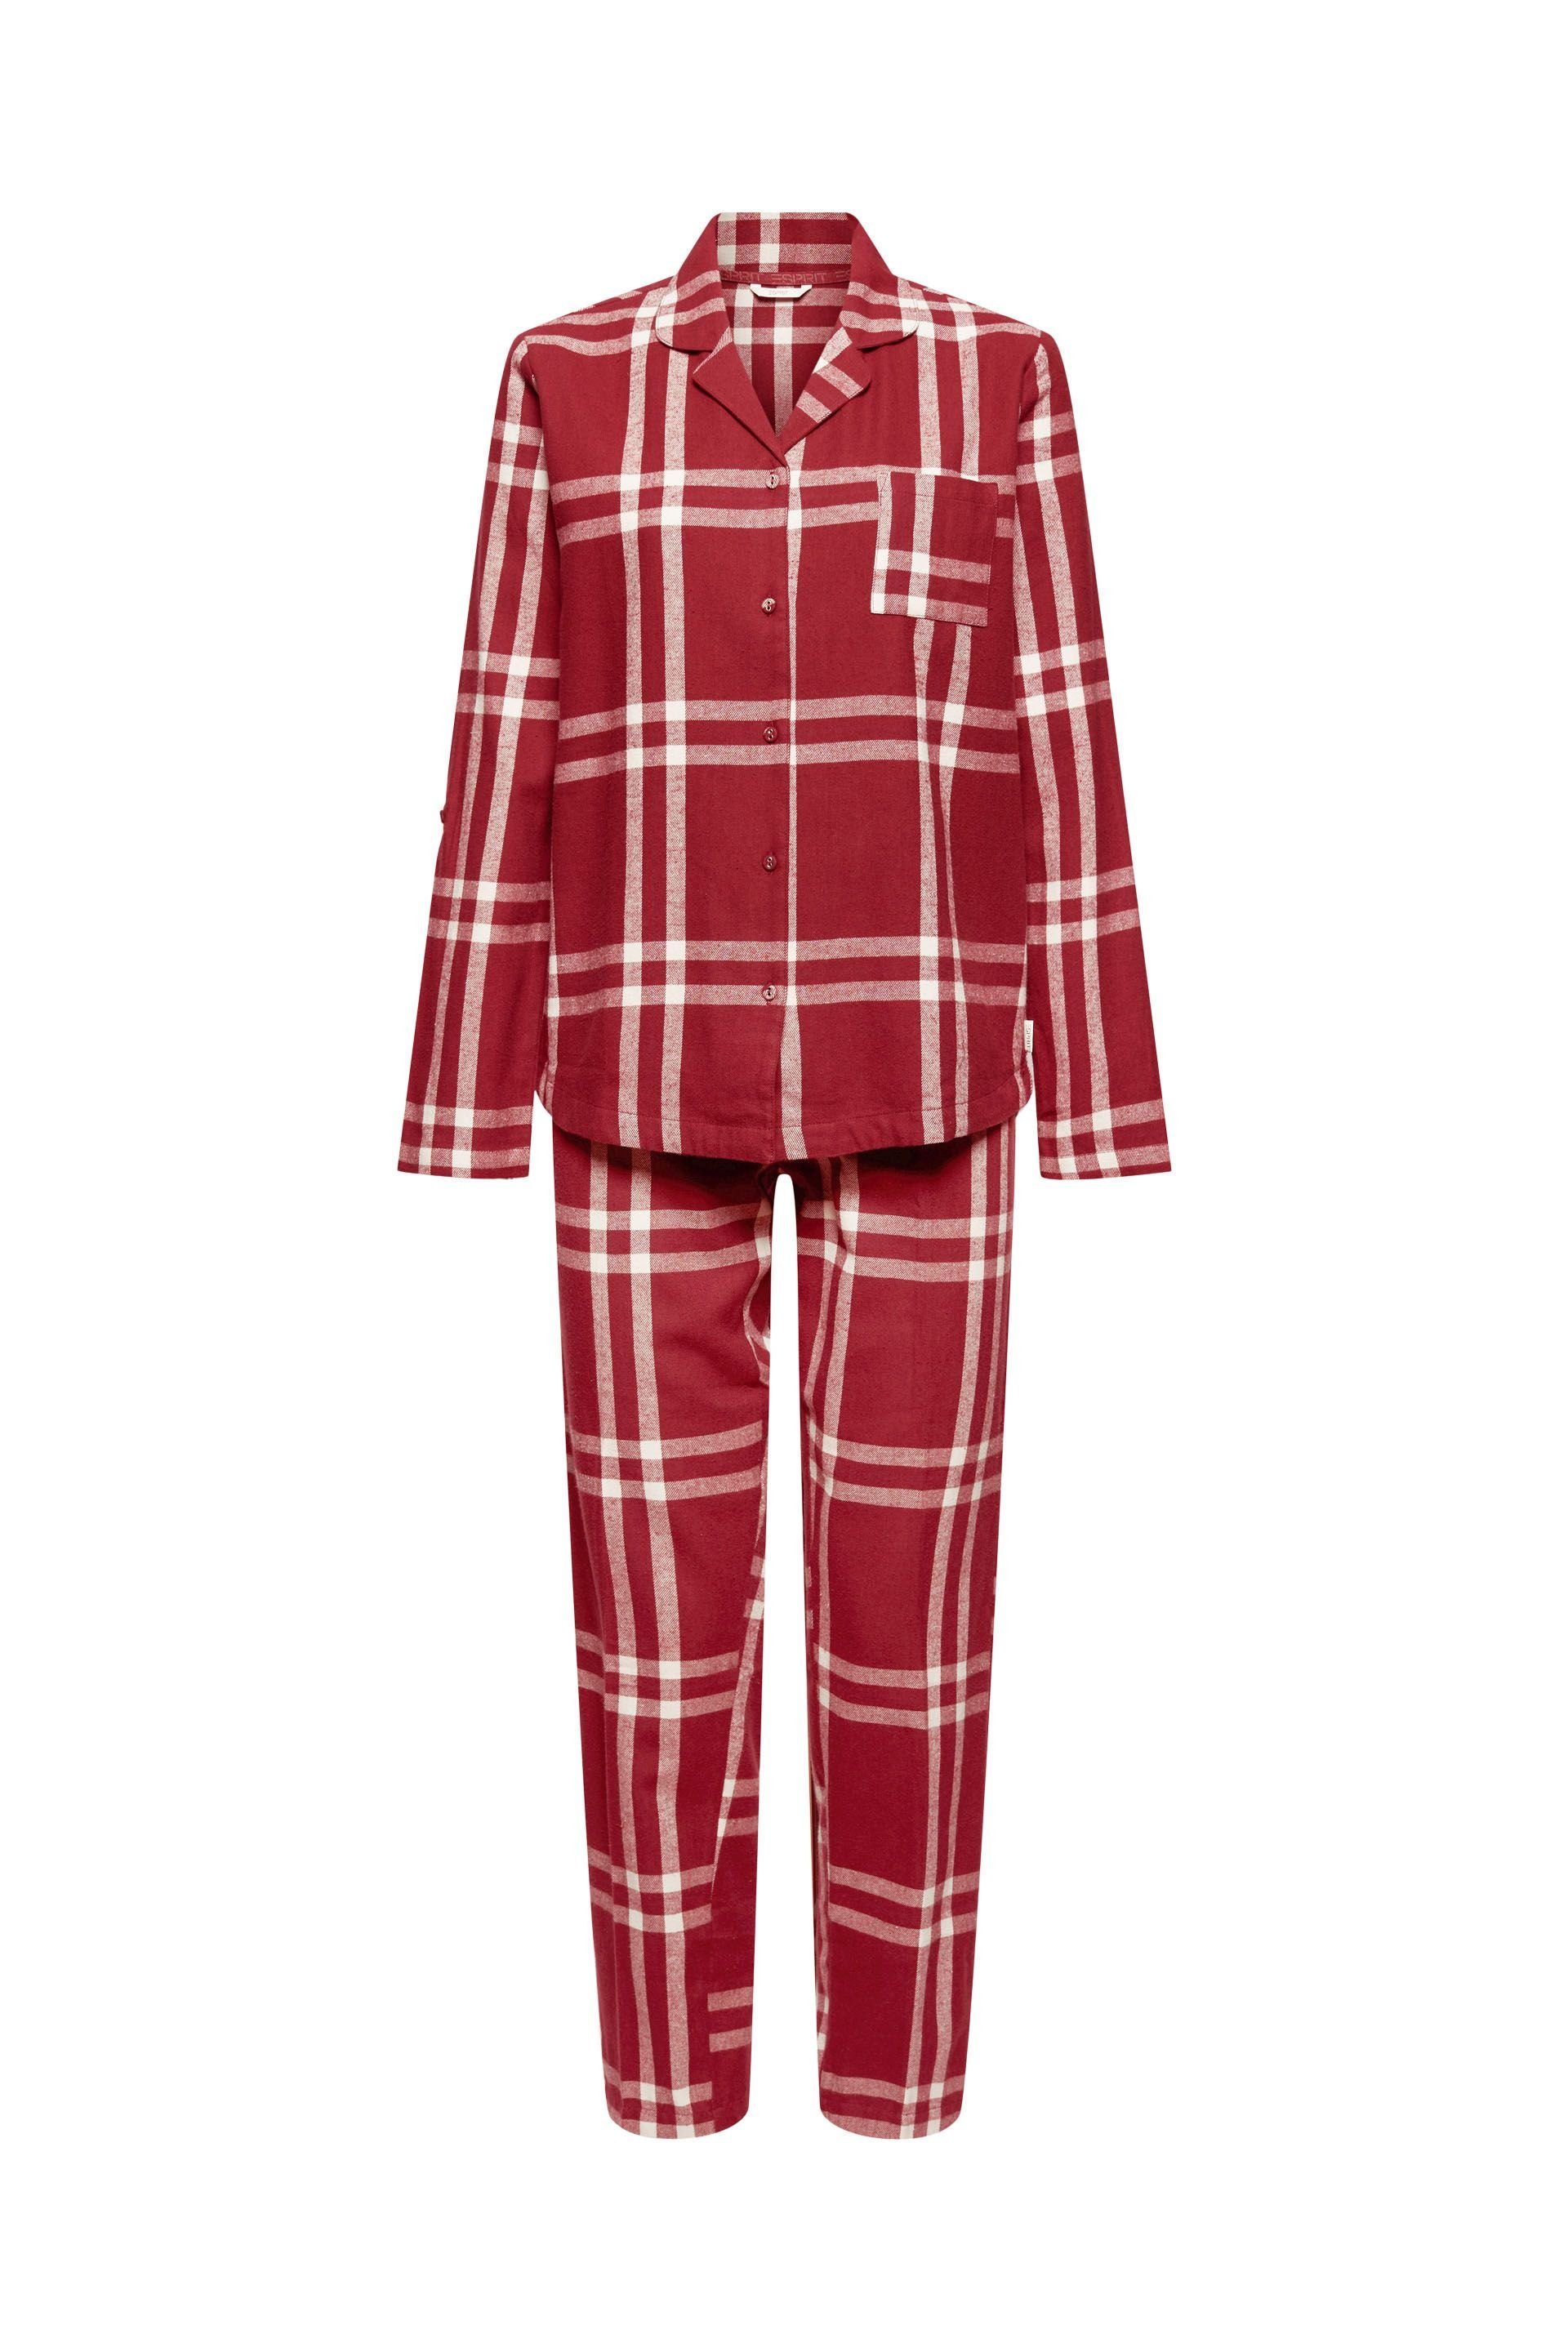 Esprit Pyjama Karierter Flanell-Pyjama cherry red